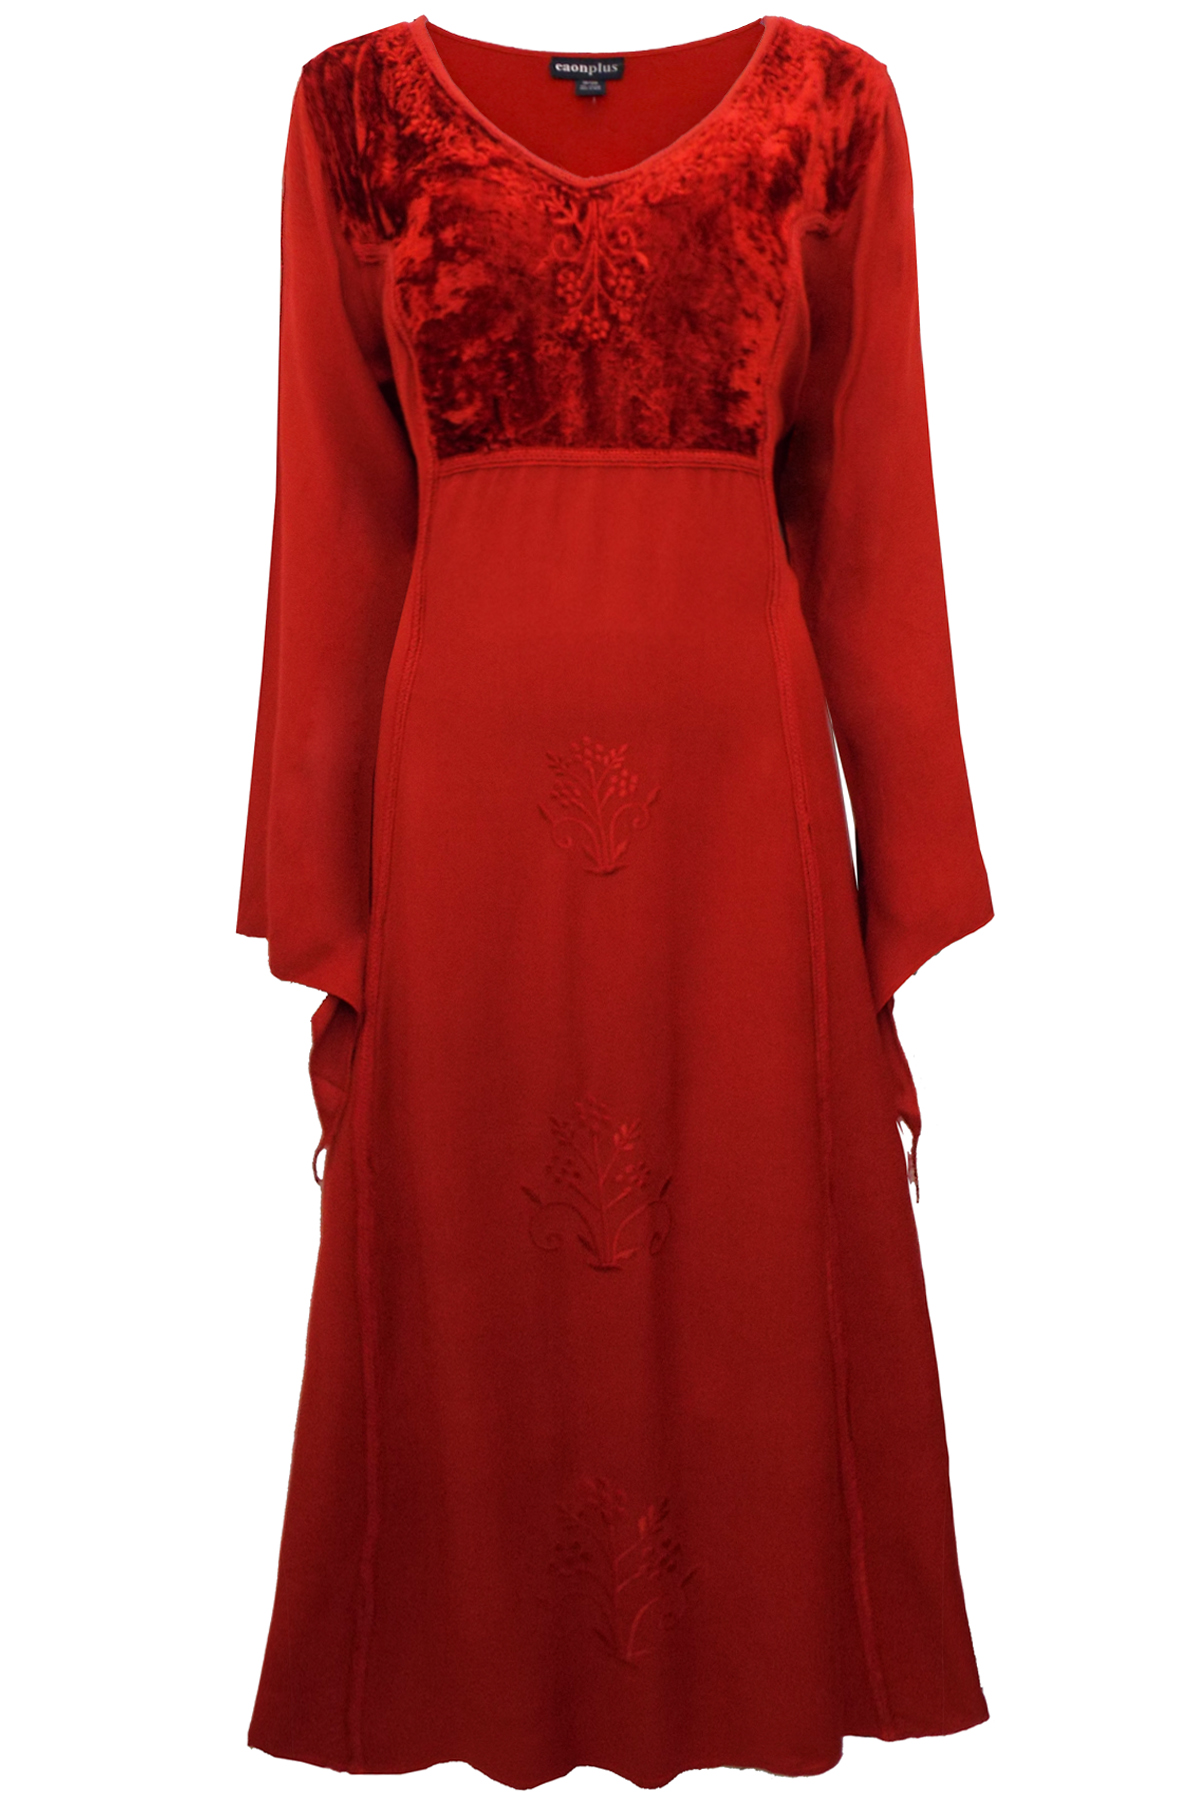 eaonplus RED Empire Renaissance Velvet Embroidered Dress - Plus Size 18 ...